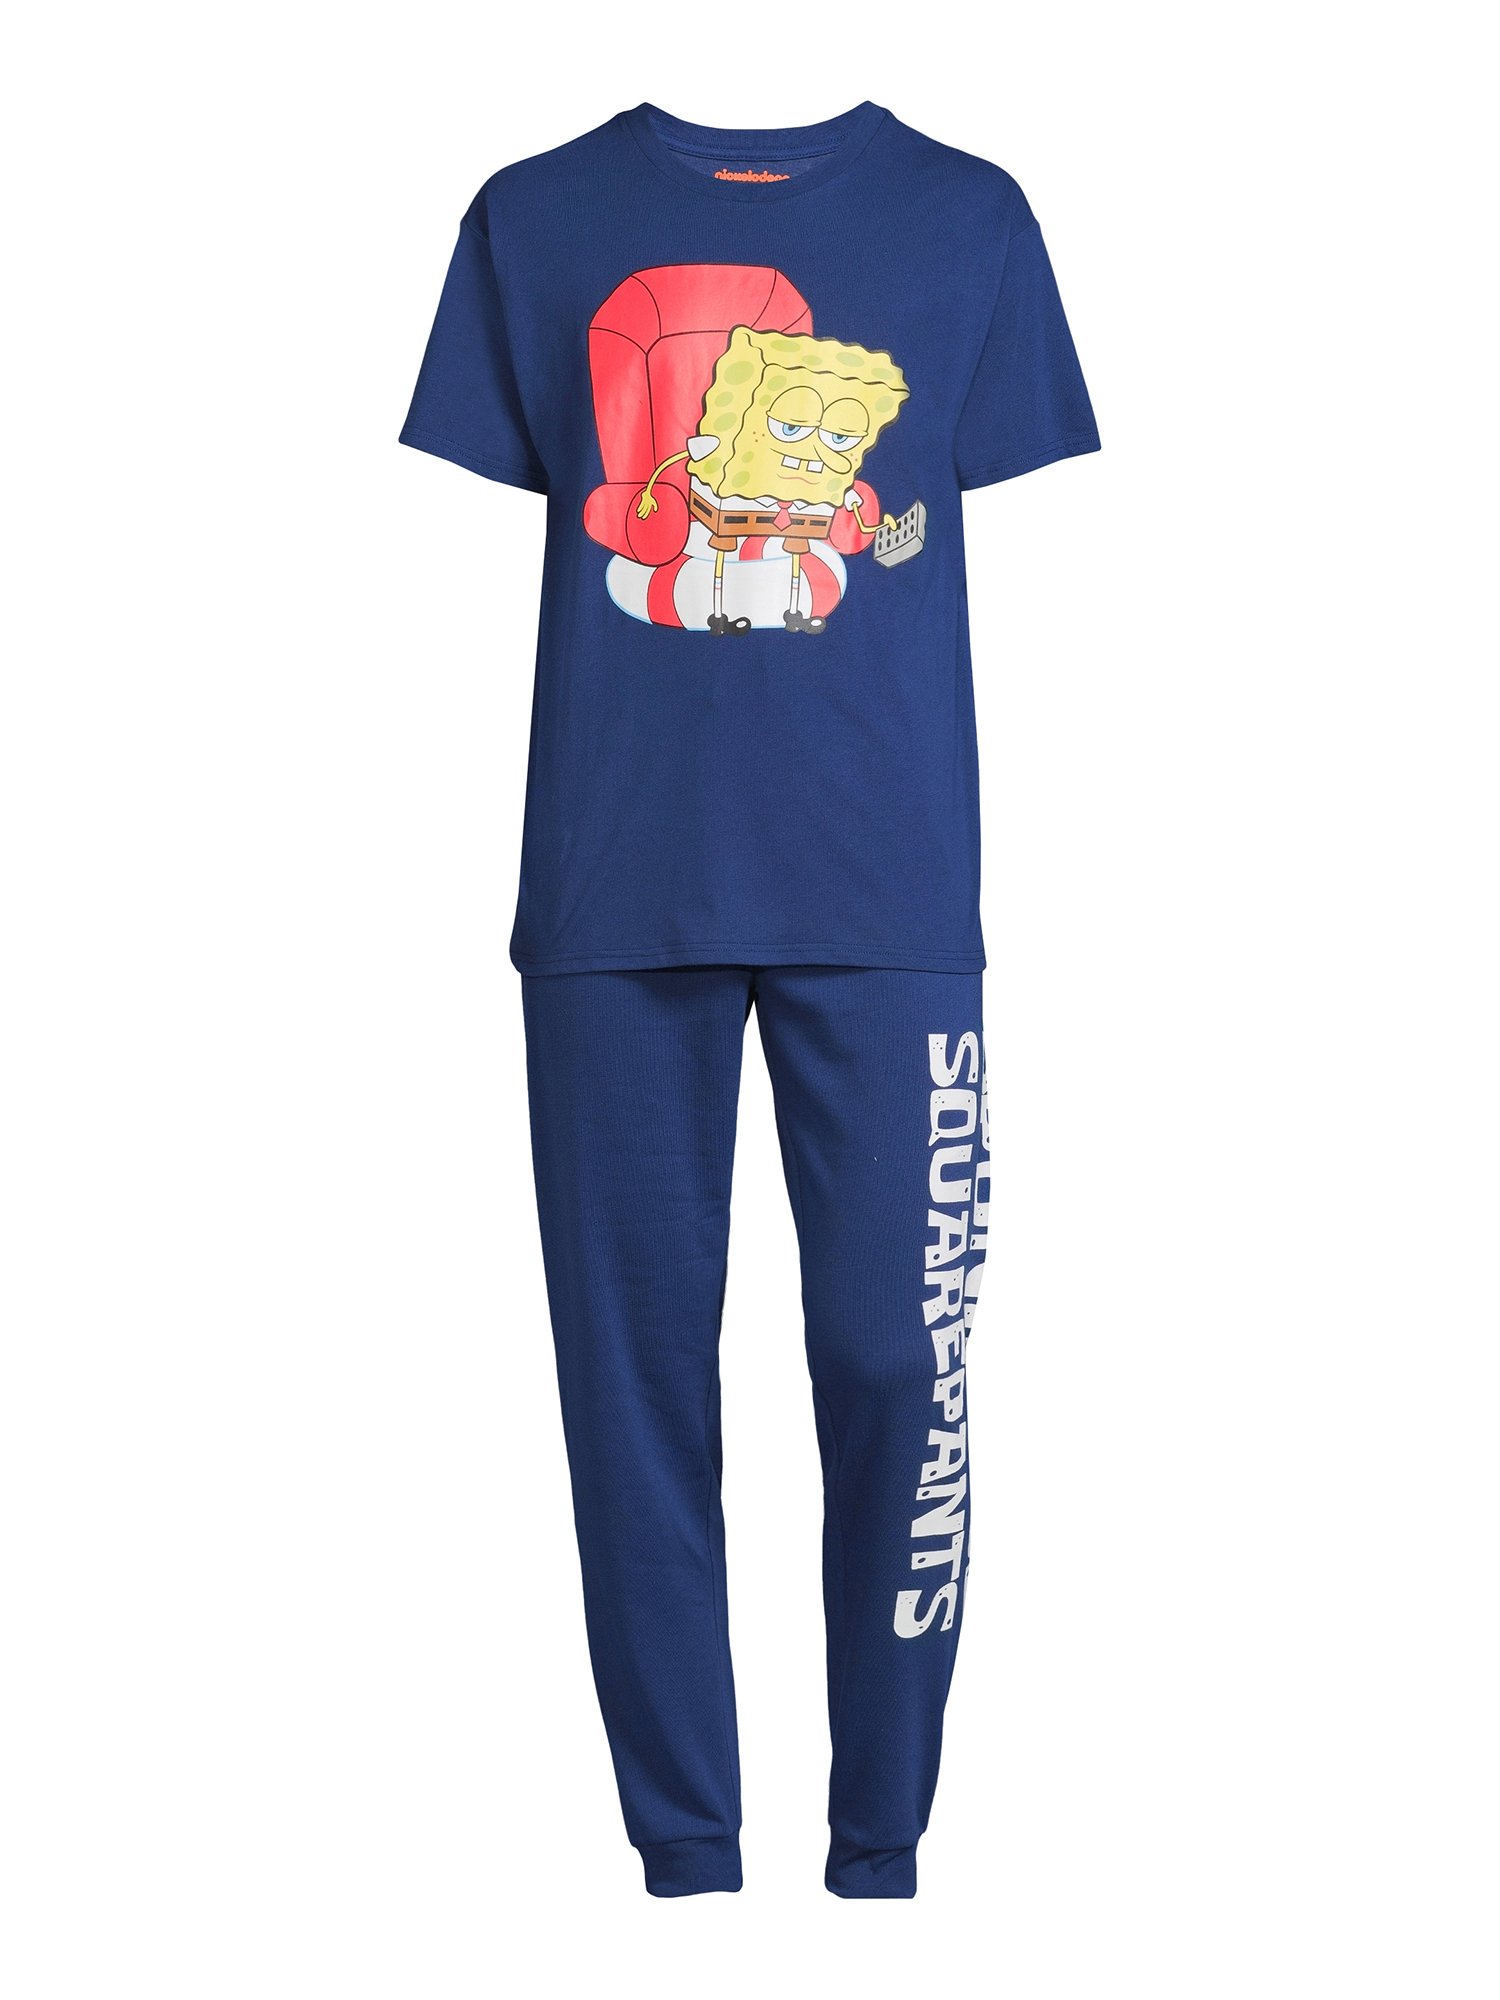 SpongeBob SquarePants Men's & Big Men's Short Sleeve Graphic T-Shirt & Jogger Sweatpants, 2-Piece Set, Sizes S-2X Men's Space Jam Graphic Tee & Sweatpants - image 5 of 5